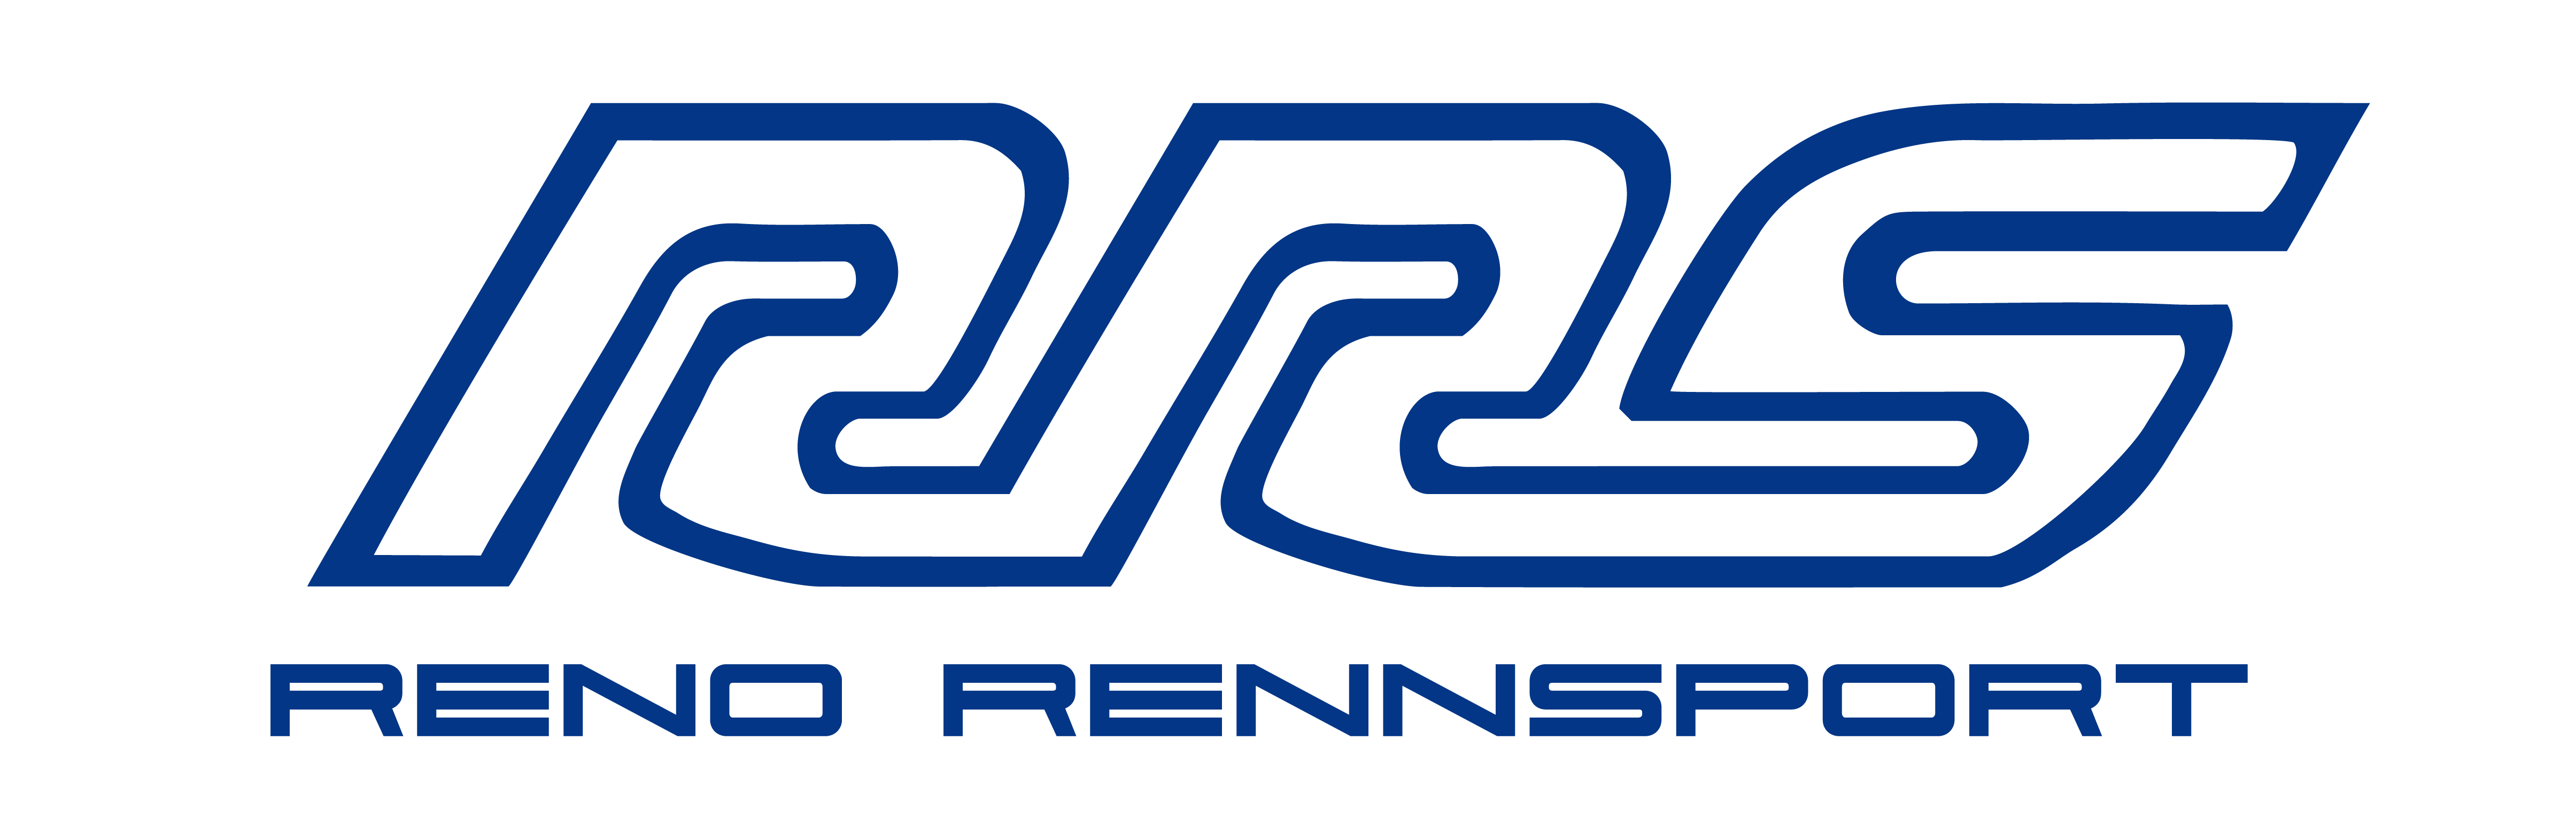 Reno Rennsport